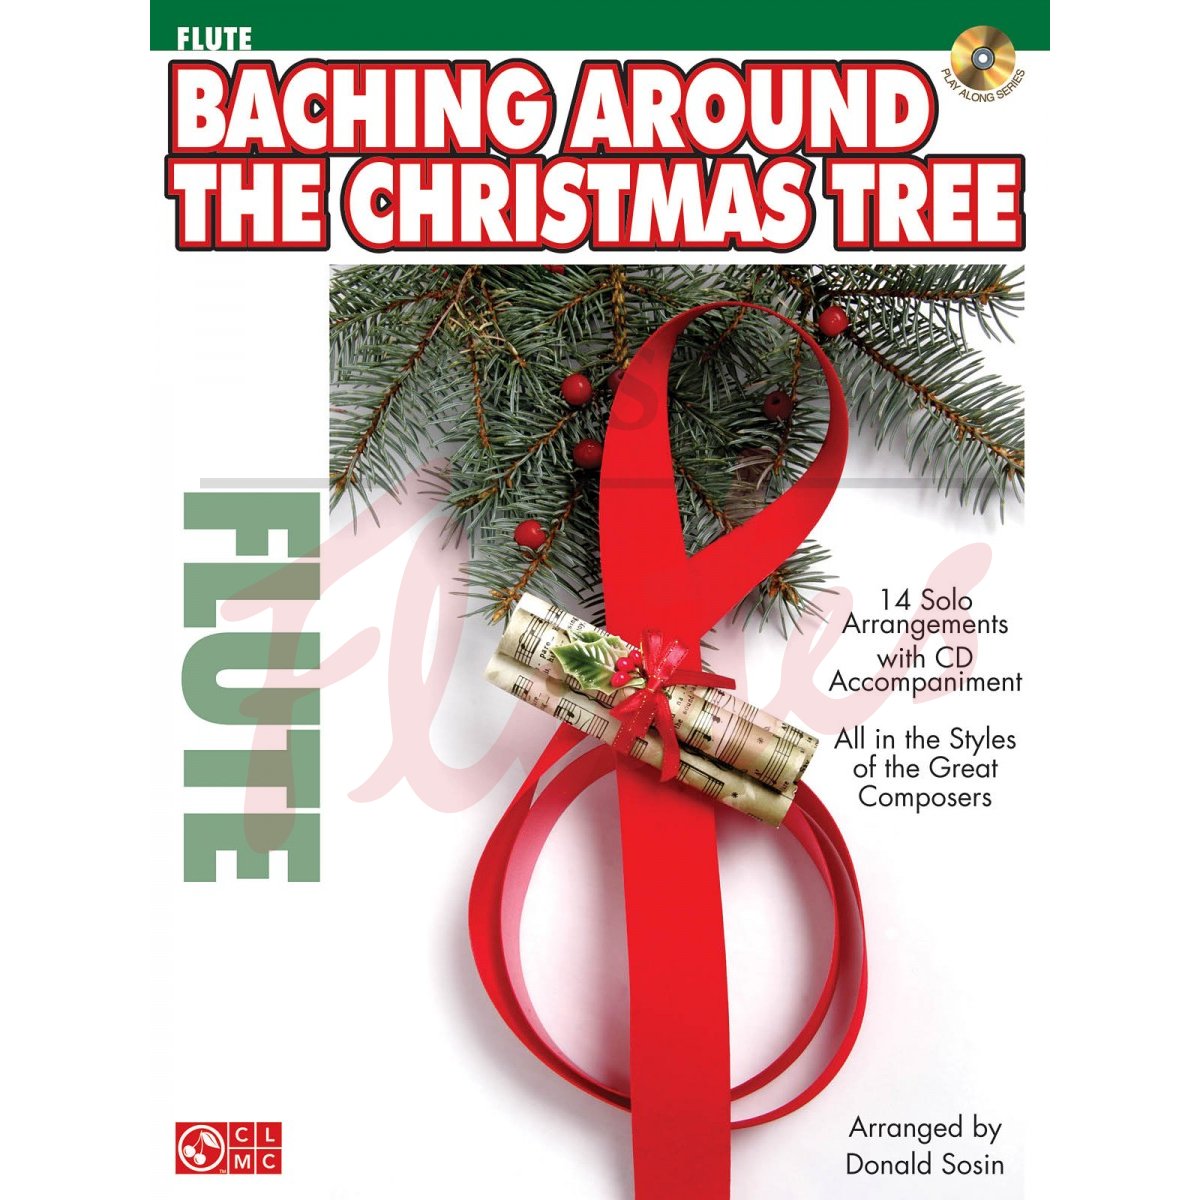 Baching Around the Christmas Tree [Flute]